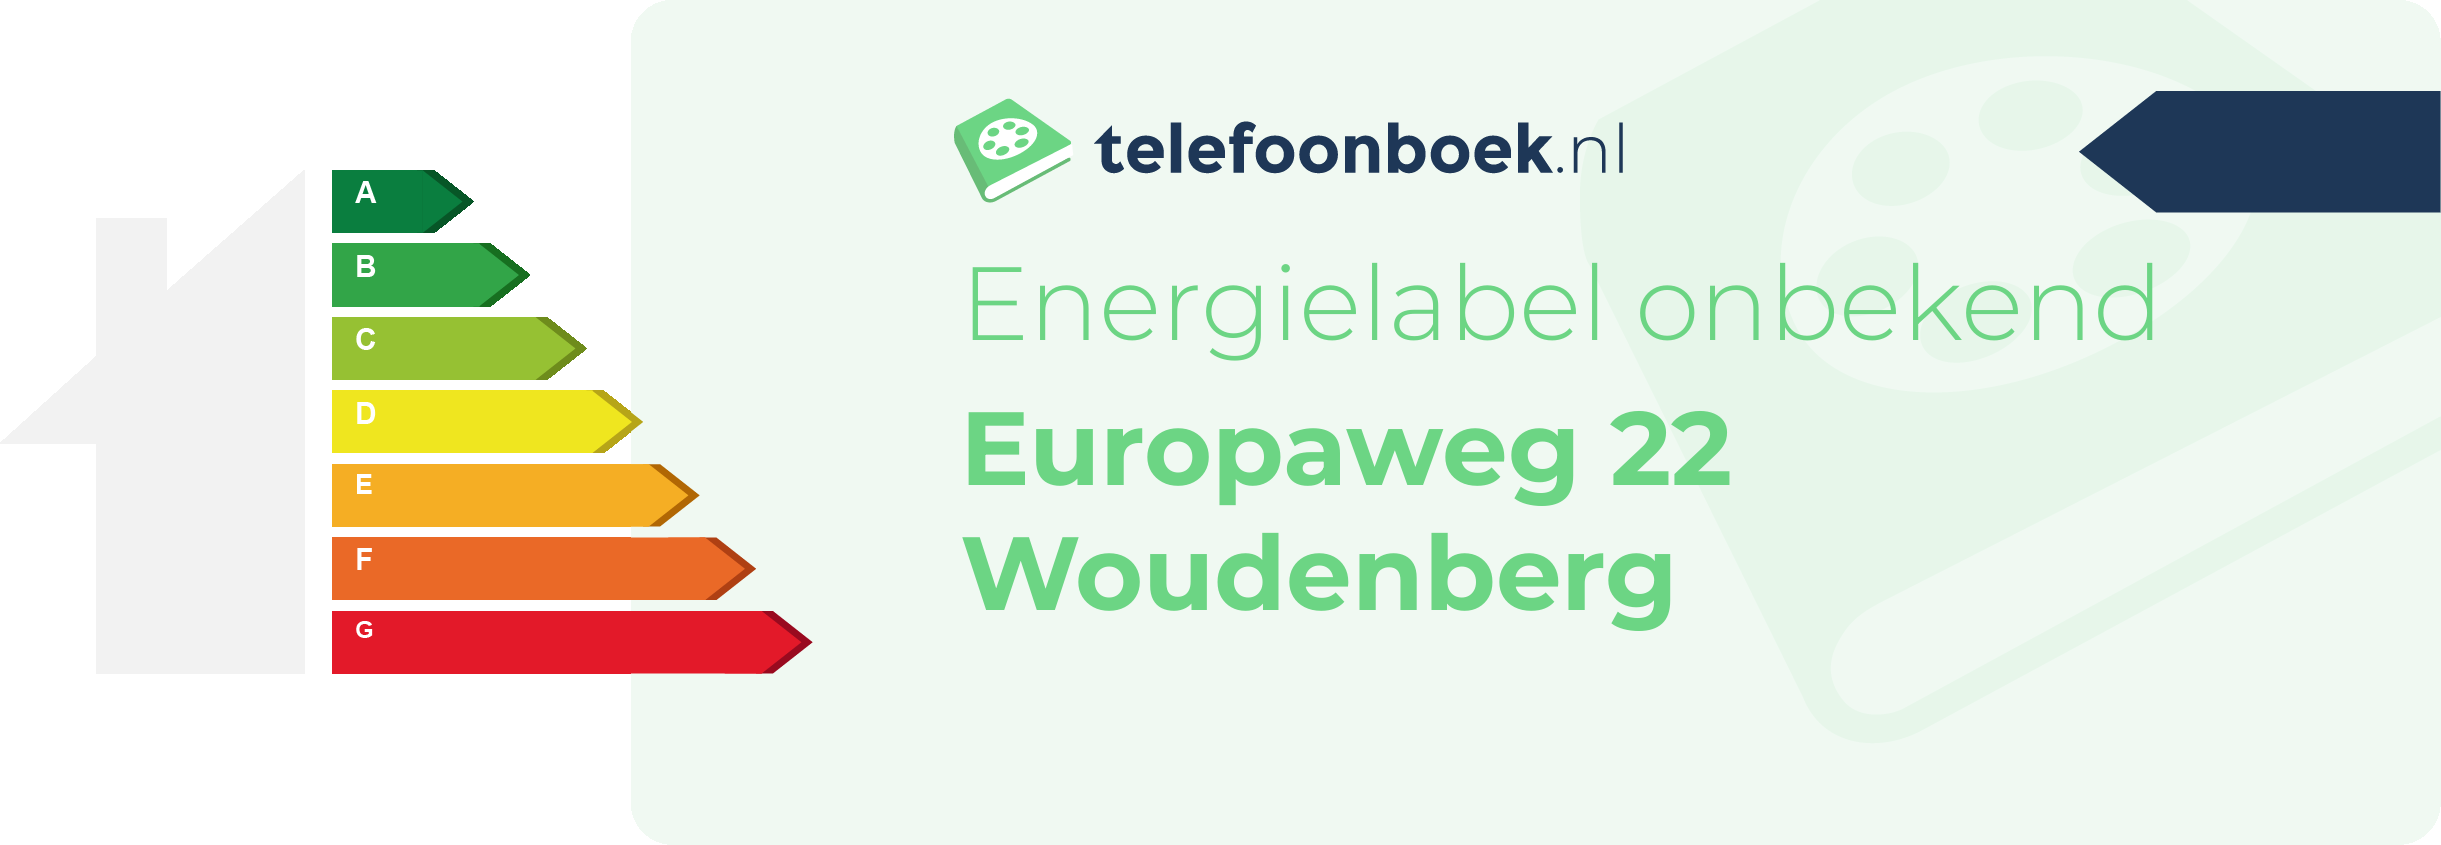 Energielabel Europaweg 22 Woudenberg